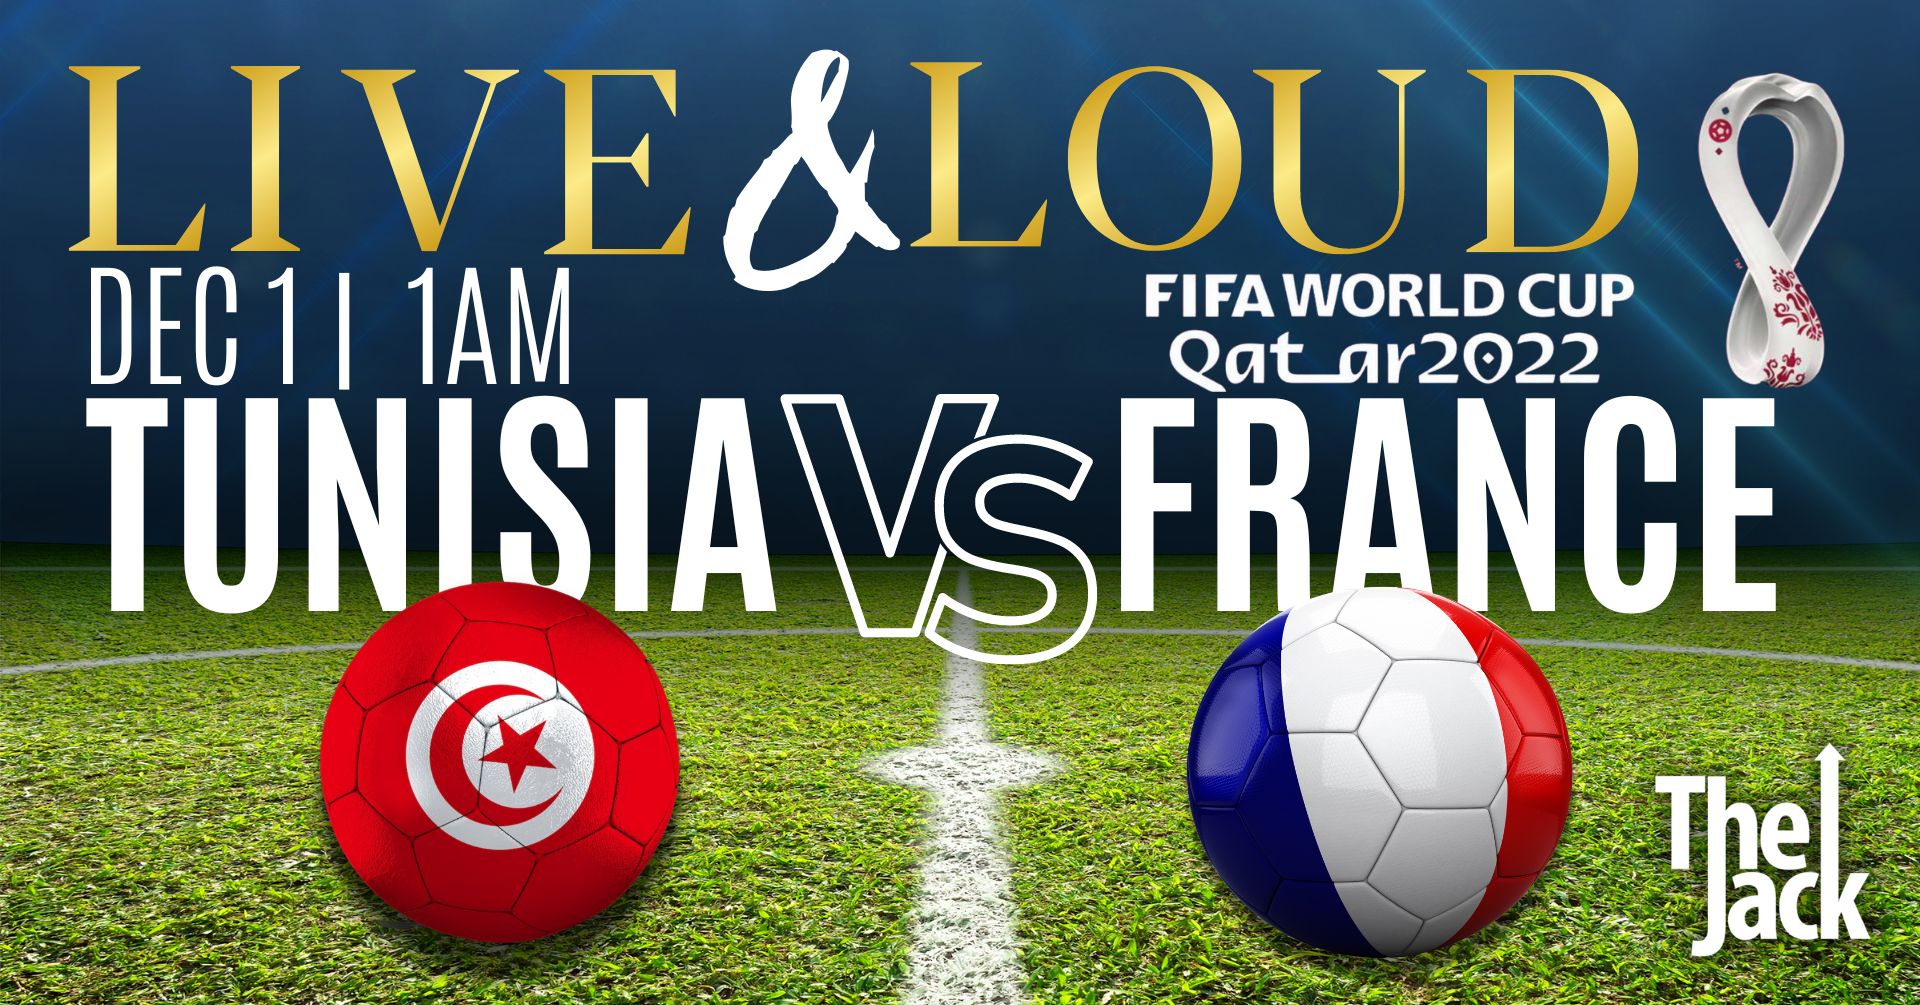 tunisia vs france - photo #24